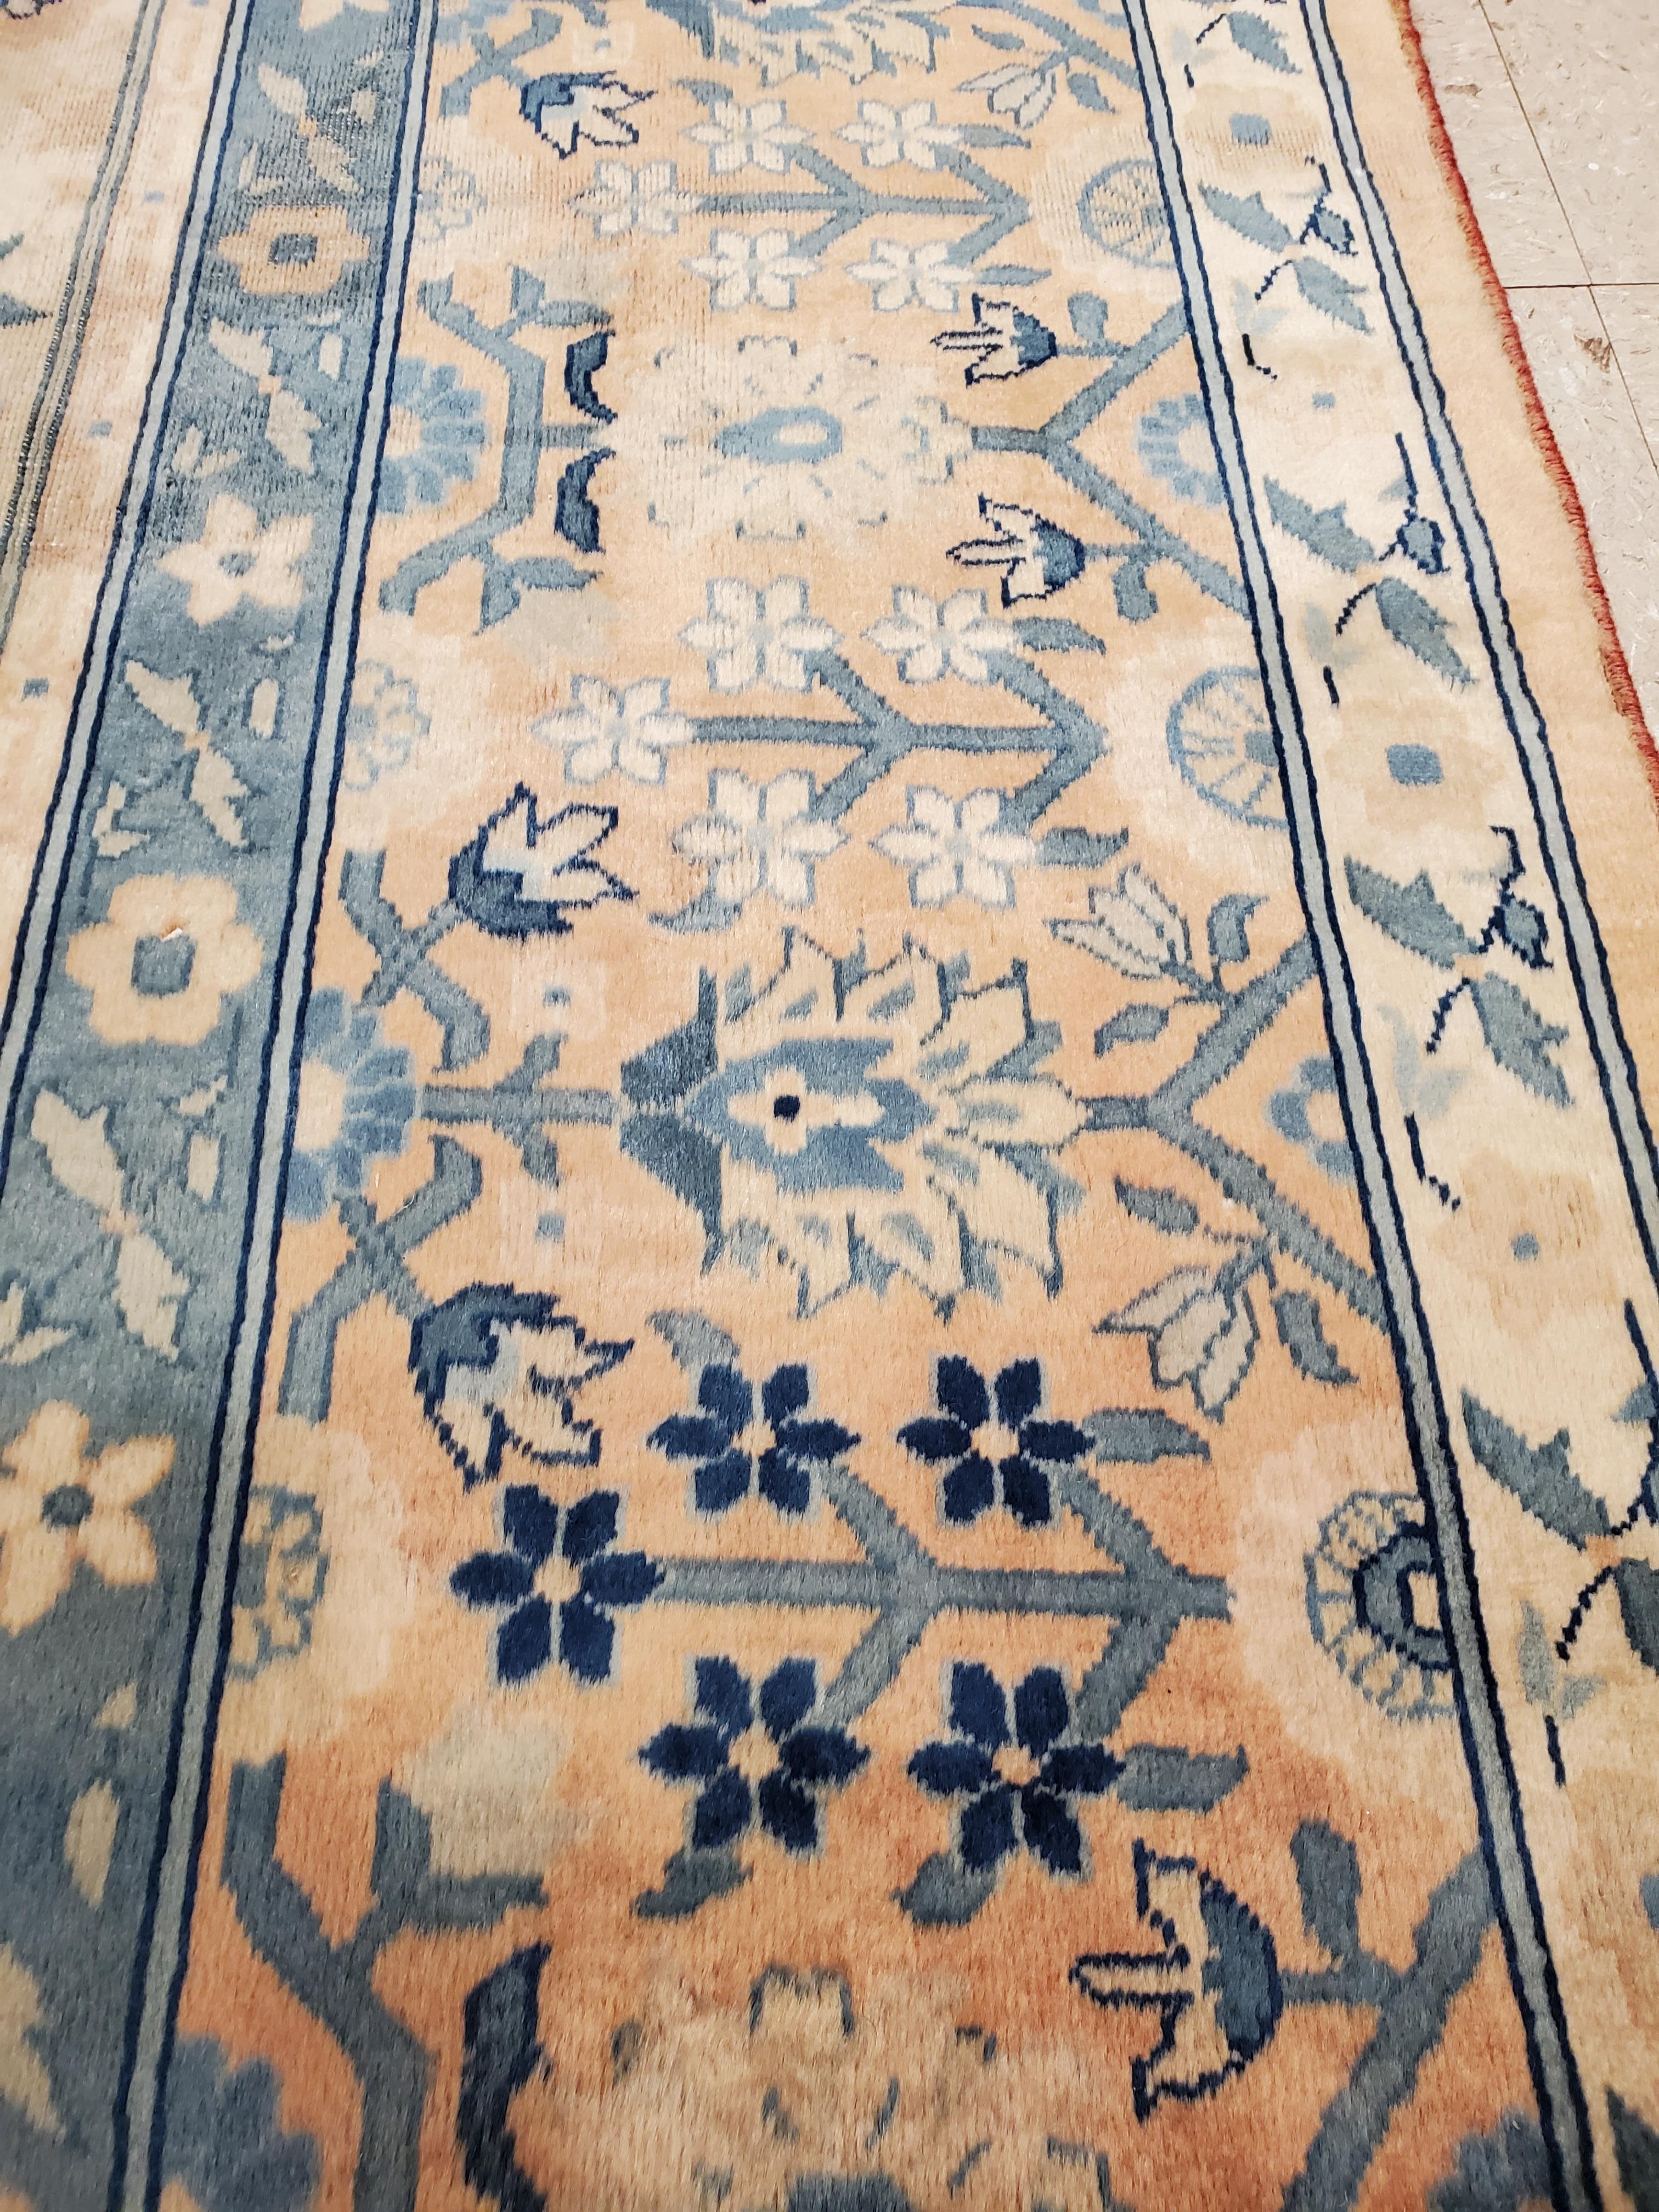 Antique Indian Amritsar Handmade Oriental Rug, Blue, Taupe Creams Allover Design For Sale 6